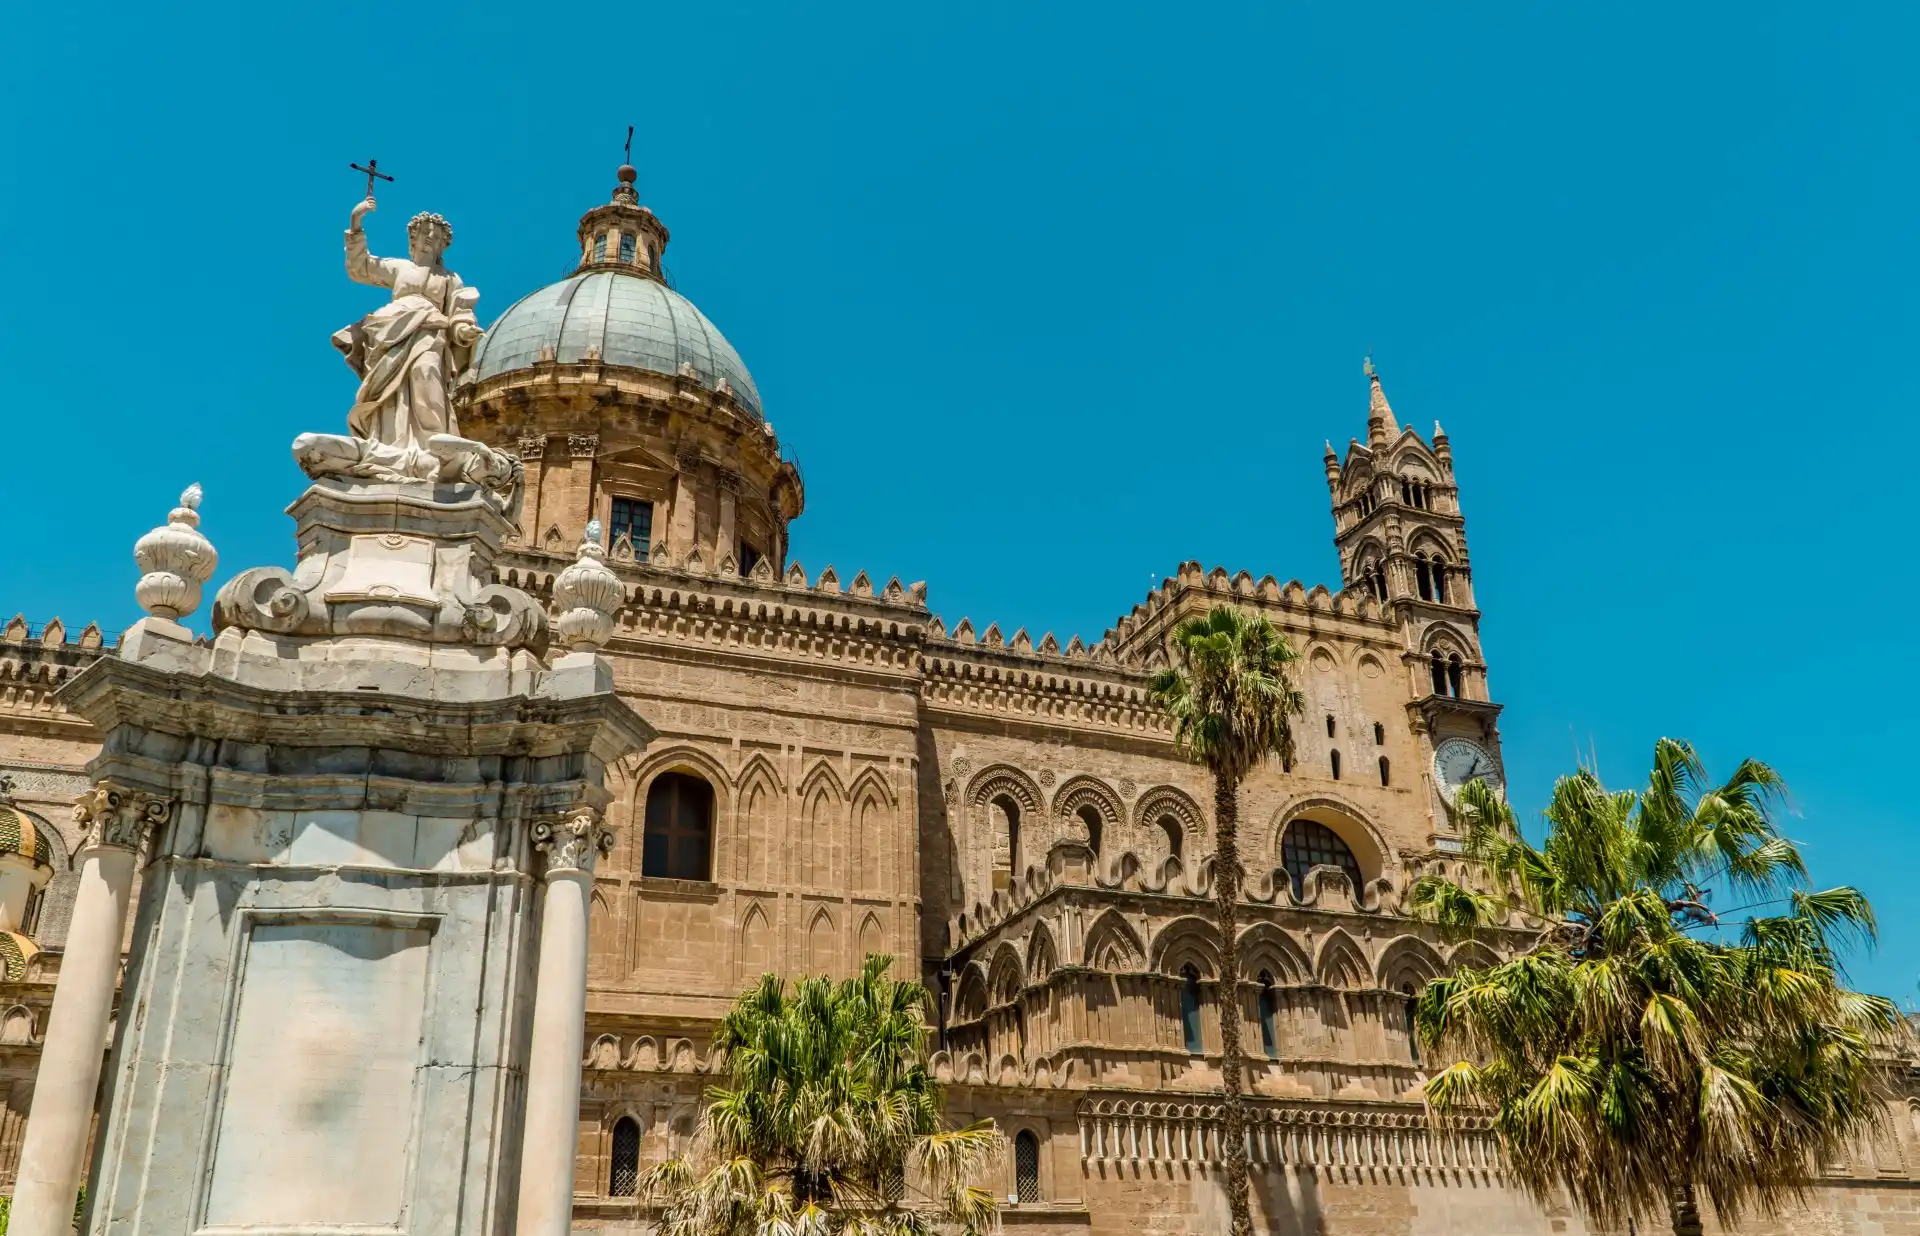 Palermo tourism